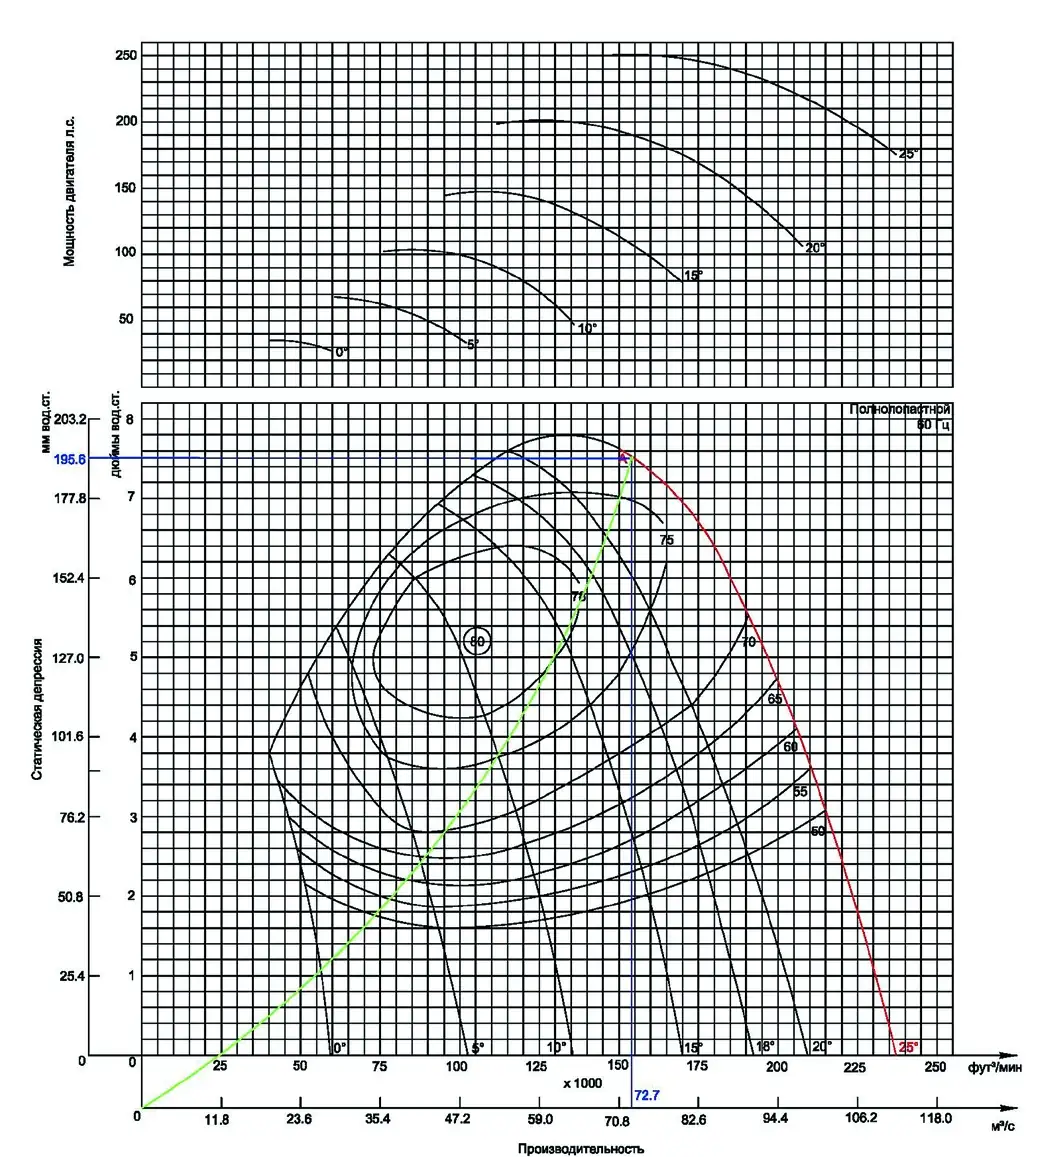 Рис. 2 Совмещённая характеристика вентилятора Alphair 7200-VAX-2700 и вентиляционной сети горных выработок р.т. Le-3 Fig. 2 Superimposed characteristics of the Alphair 7200-VAX-2700 fan and the ventilation network of mine workings of the Le-3 ore body